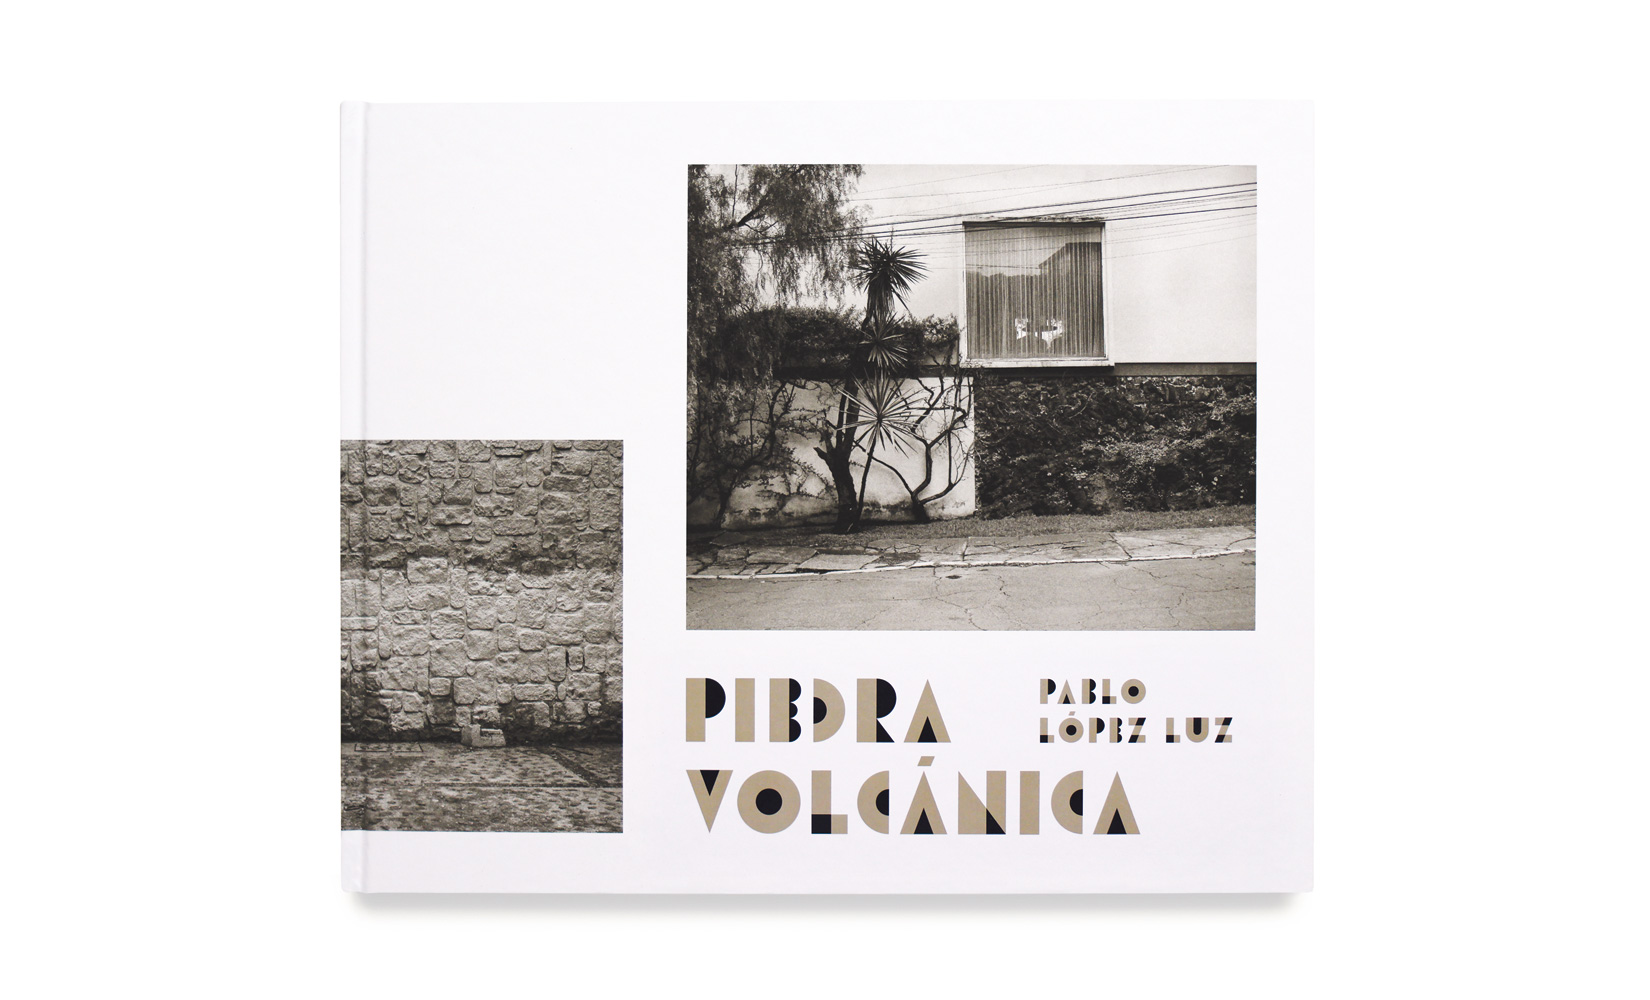 PIEDRA-VOLCANICA-PABLO-LOPEZ-LUZ-TOLUCA-STUDIO-02.jpg